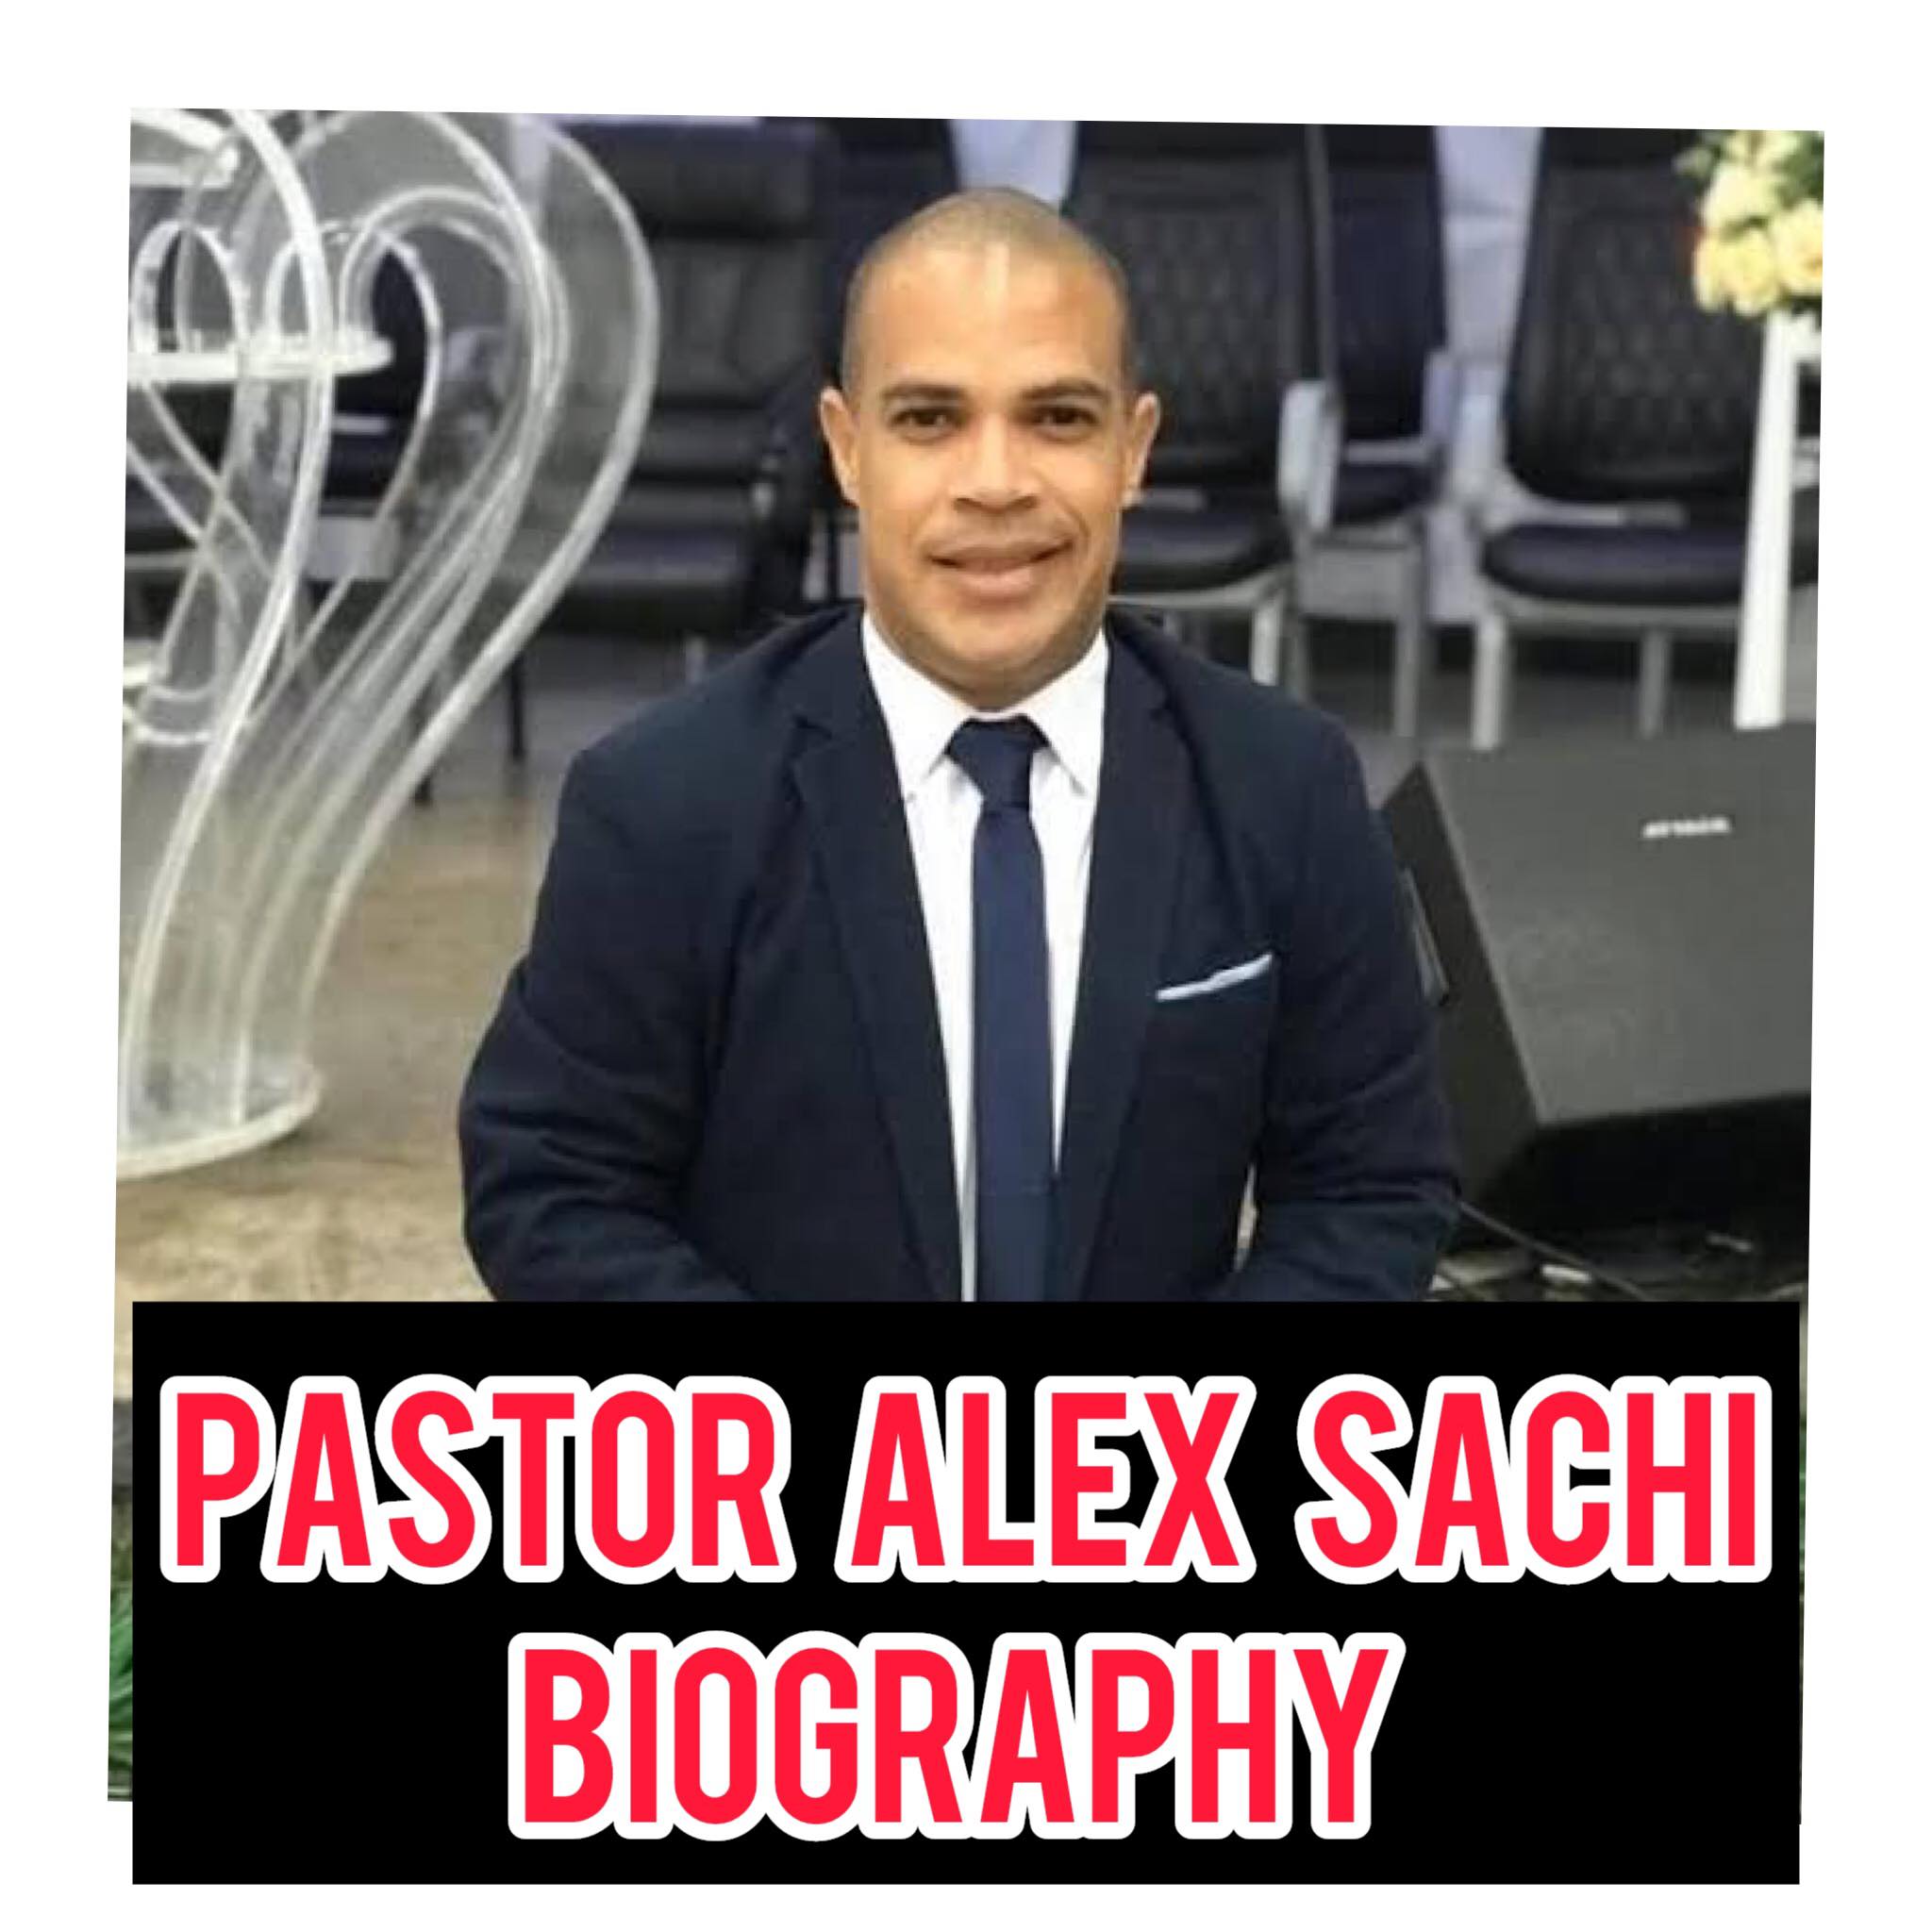 Pastor Alex Sachi Biography